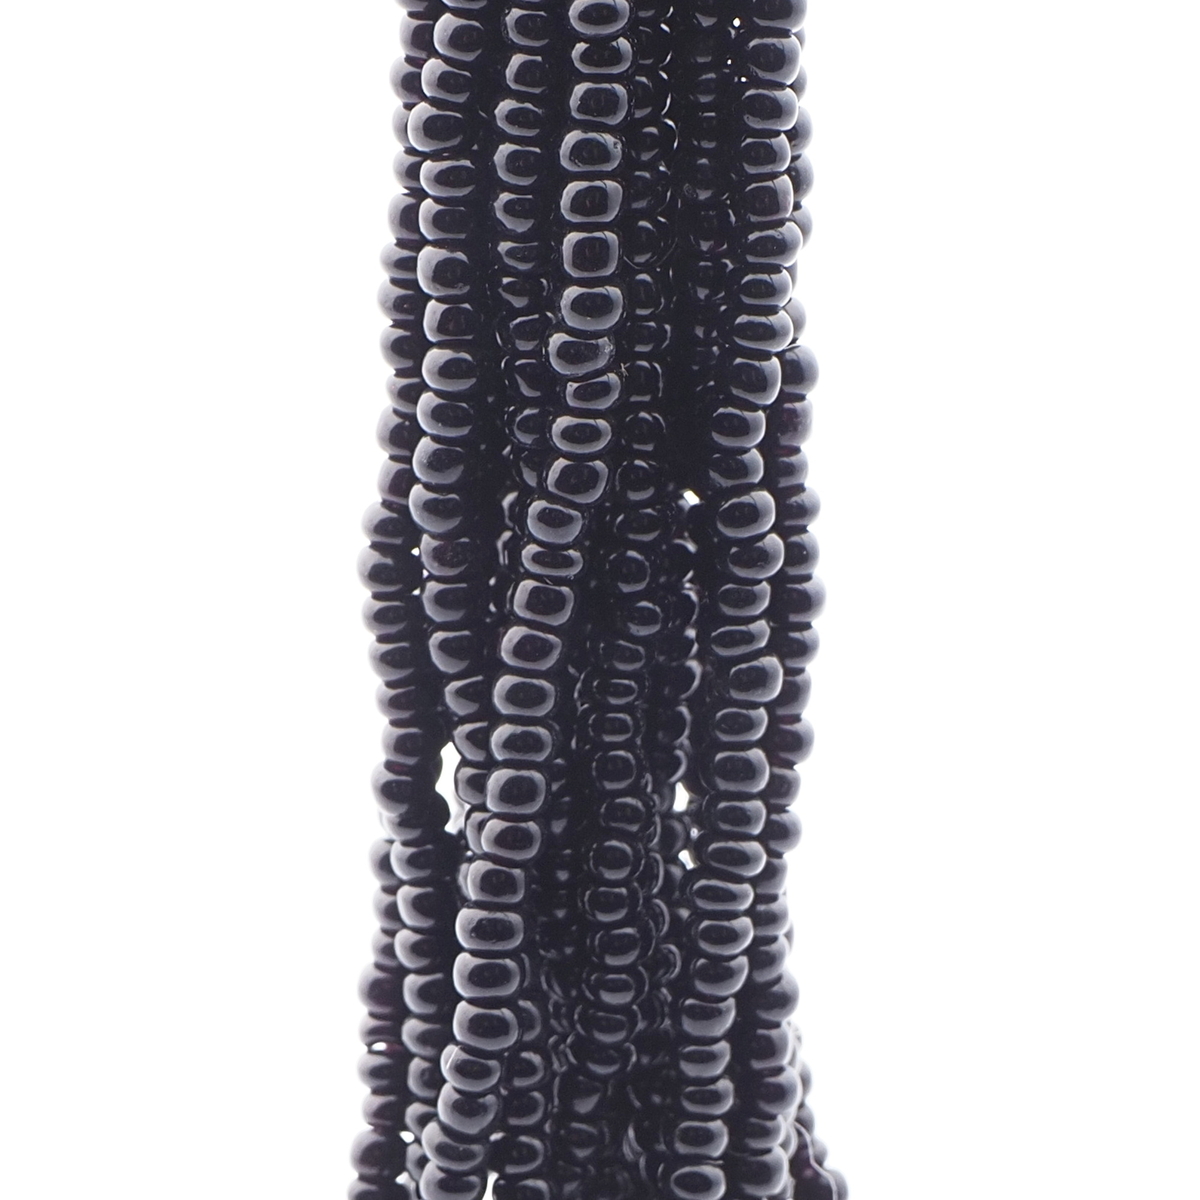 Hank (900) Vintage Czech black seed beads 19 beads per inch